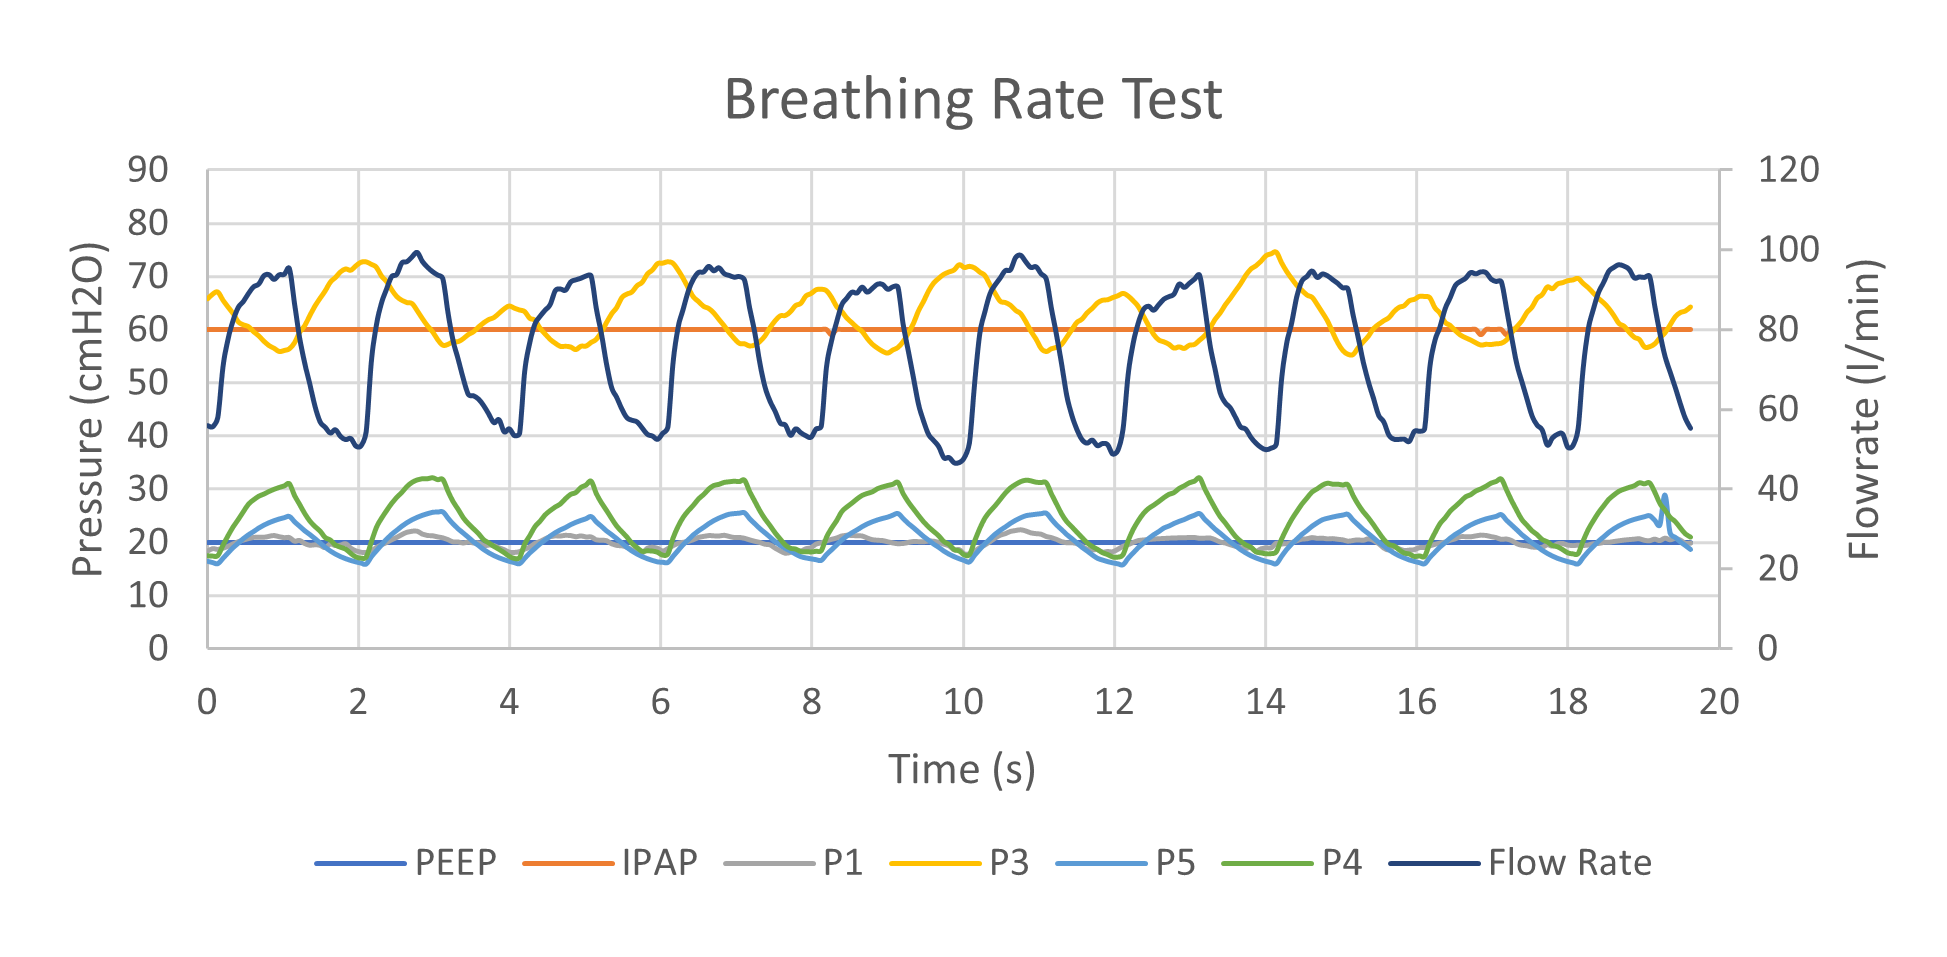 Figure 9: Breathing Rate Test